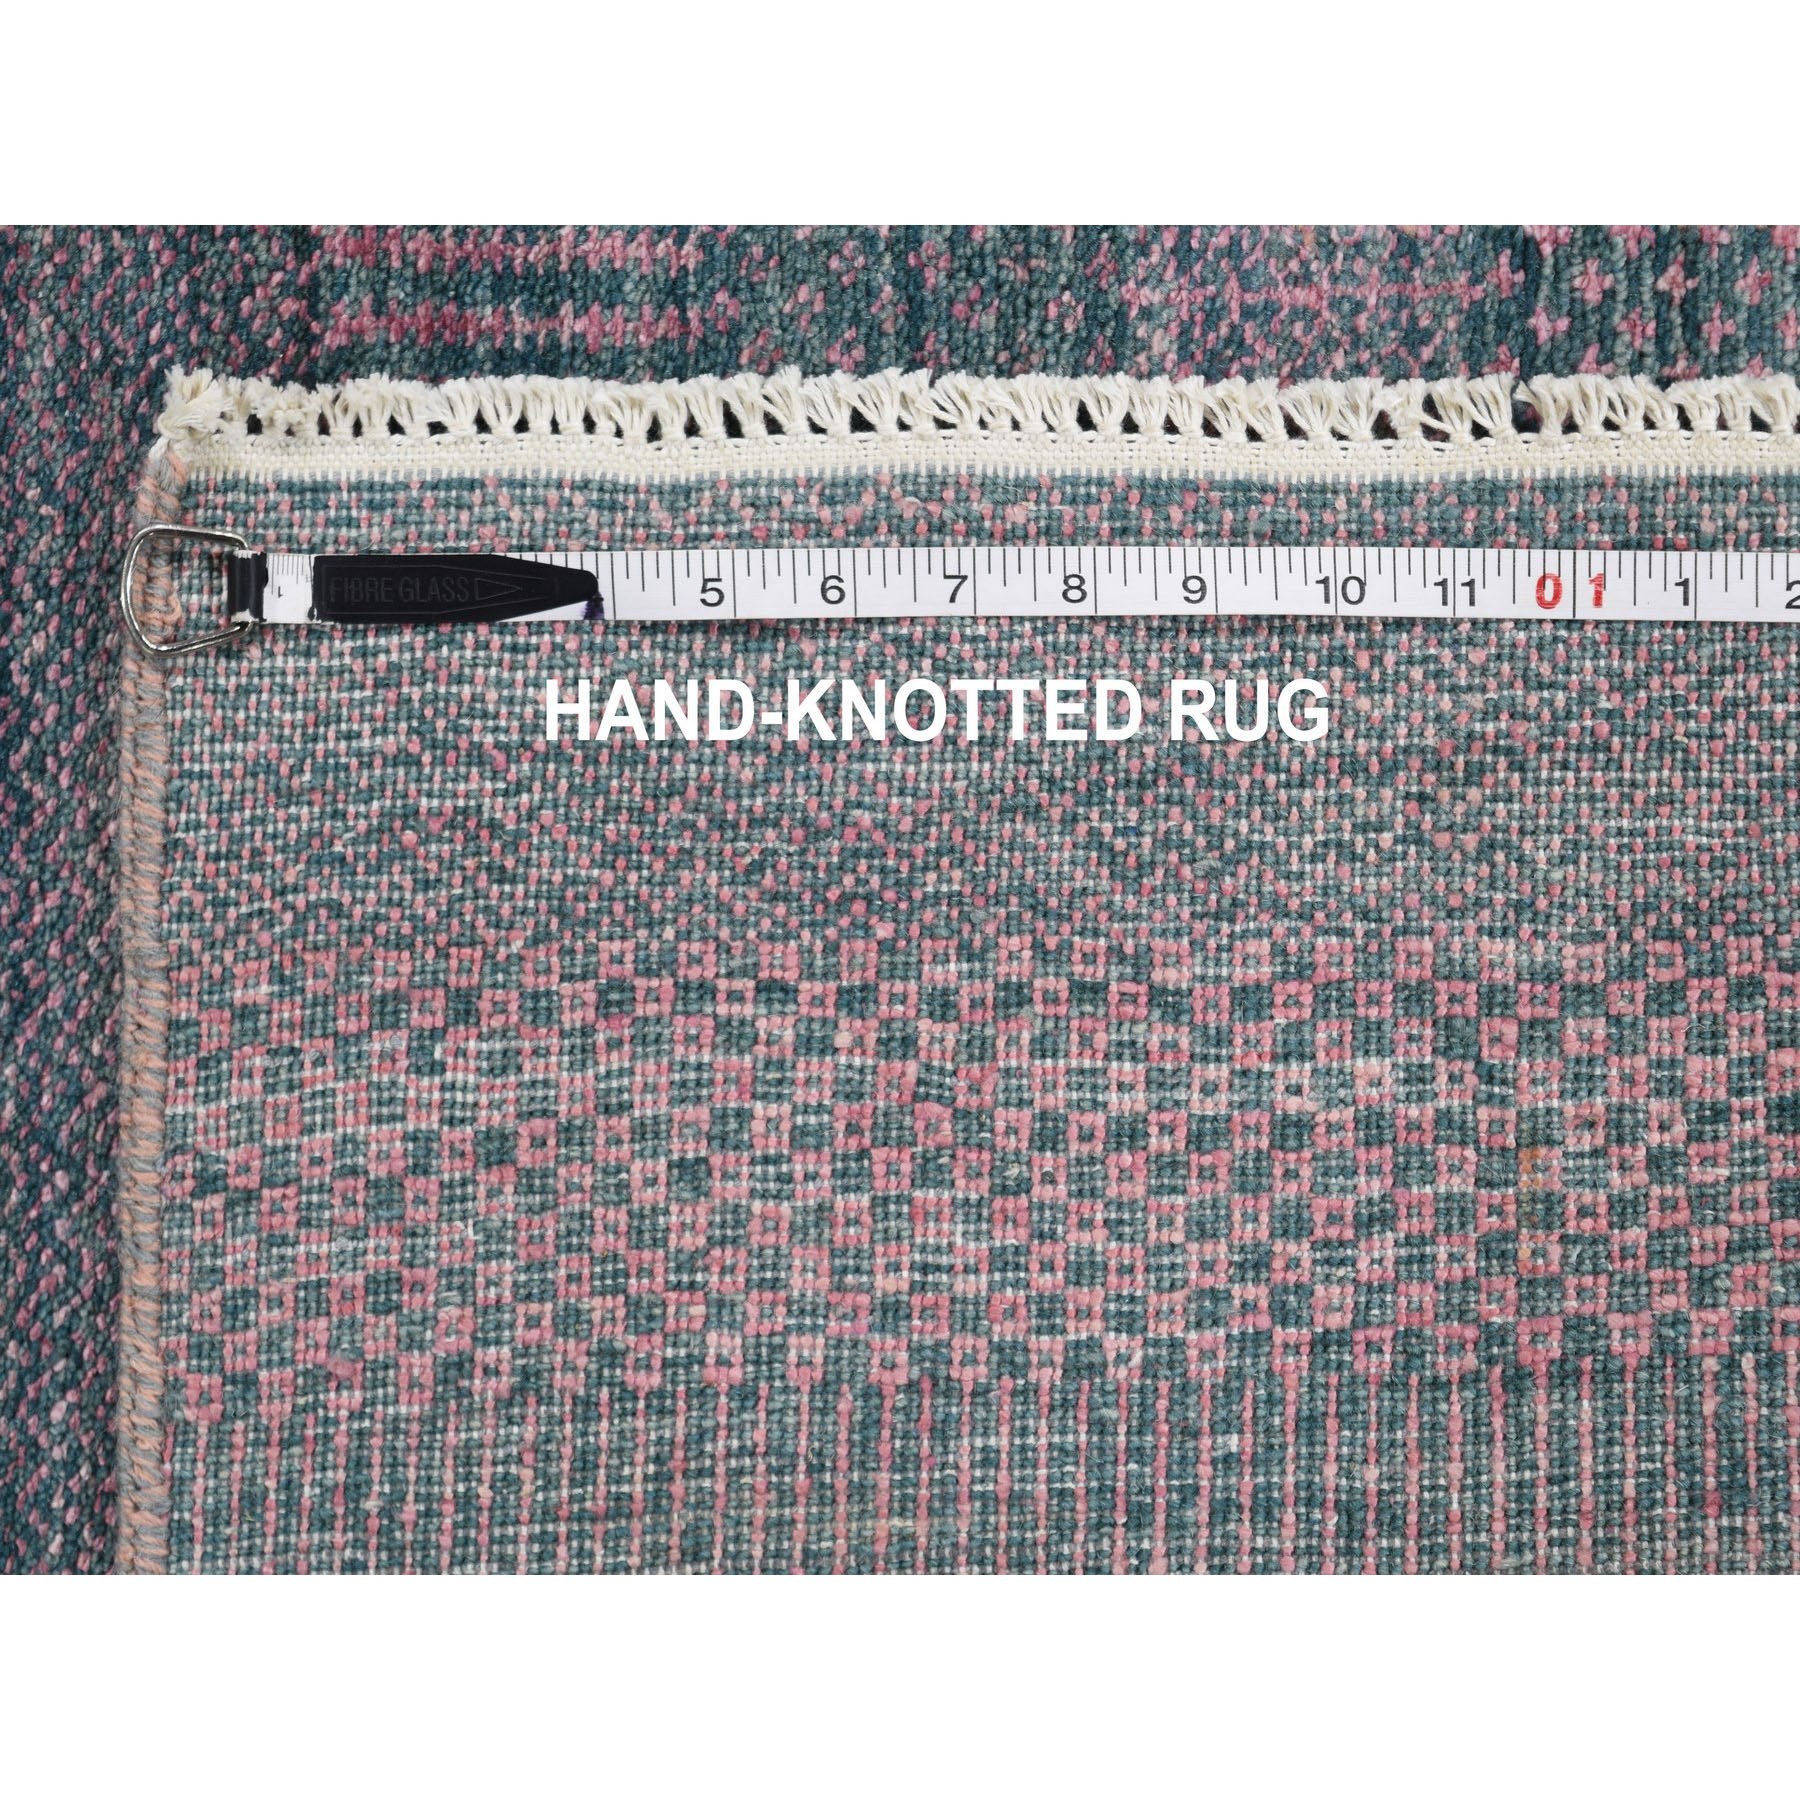 2-7 x8-10  Green Wool and Silk Grass Design Runner Hand Knotted Oriental Rug 